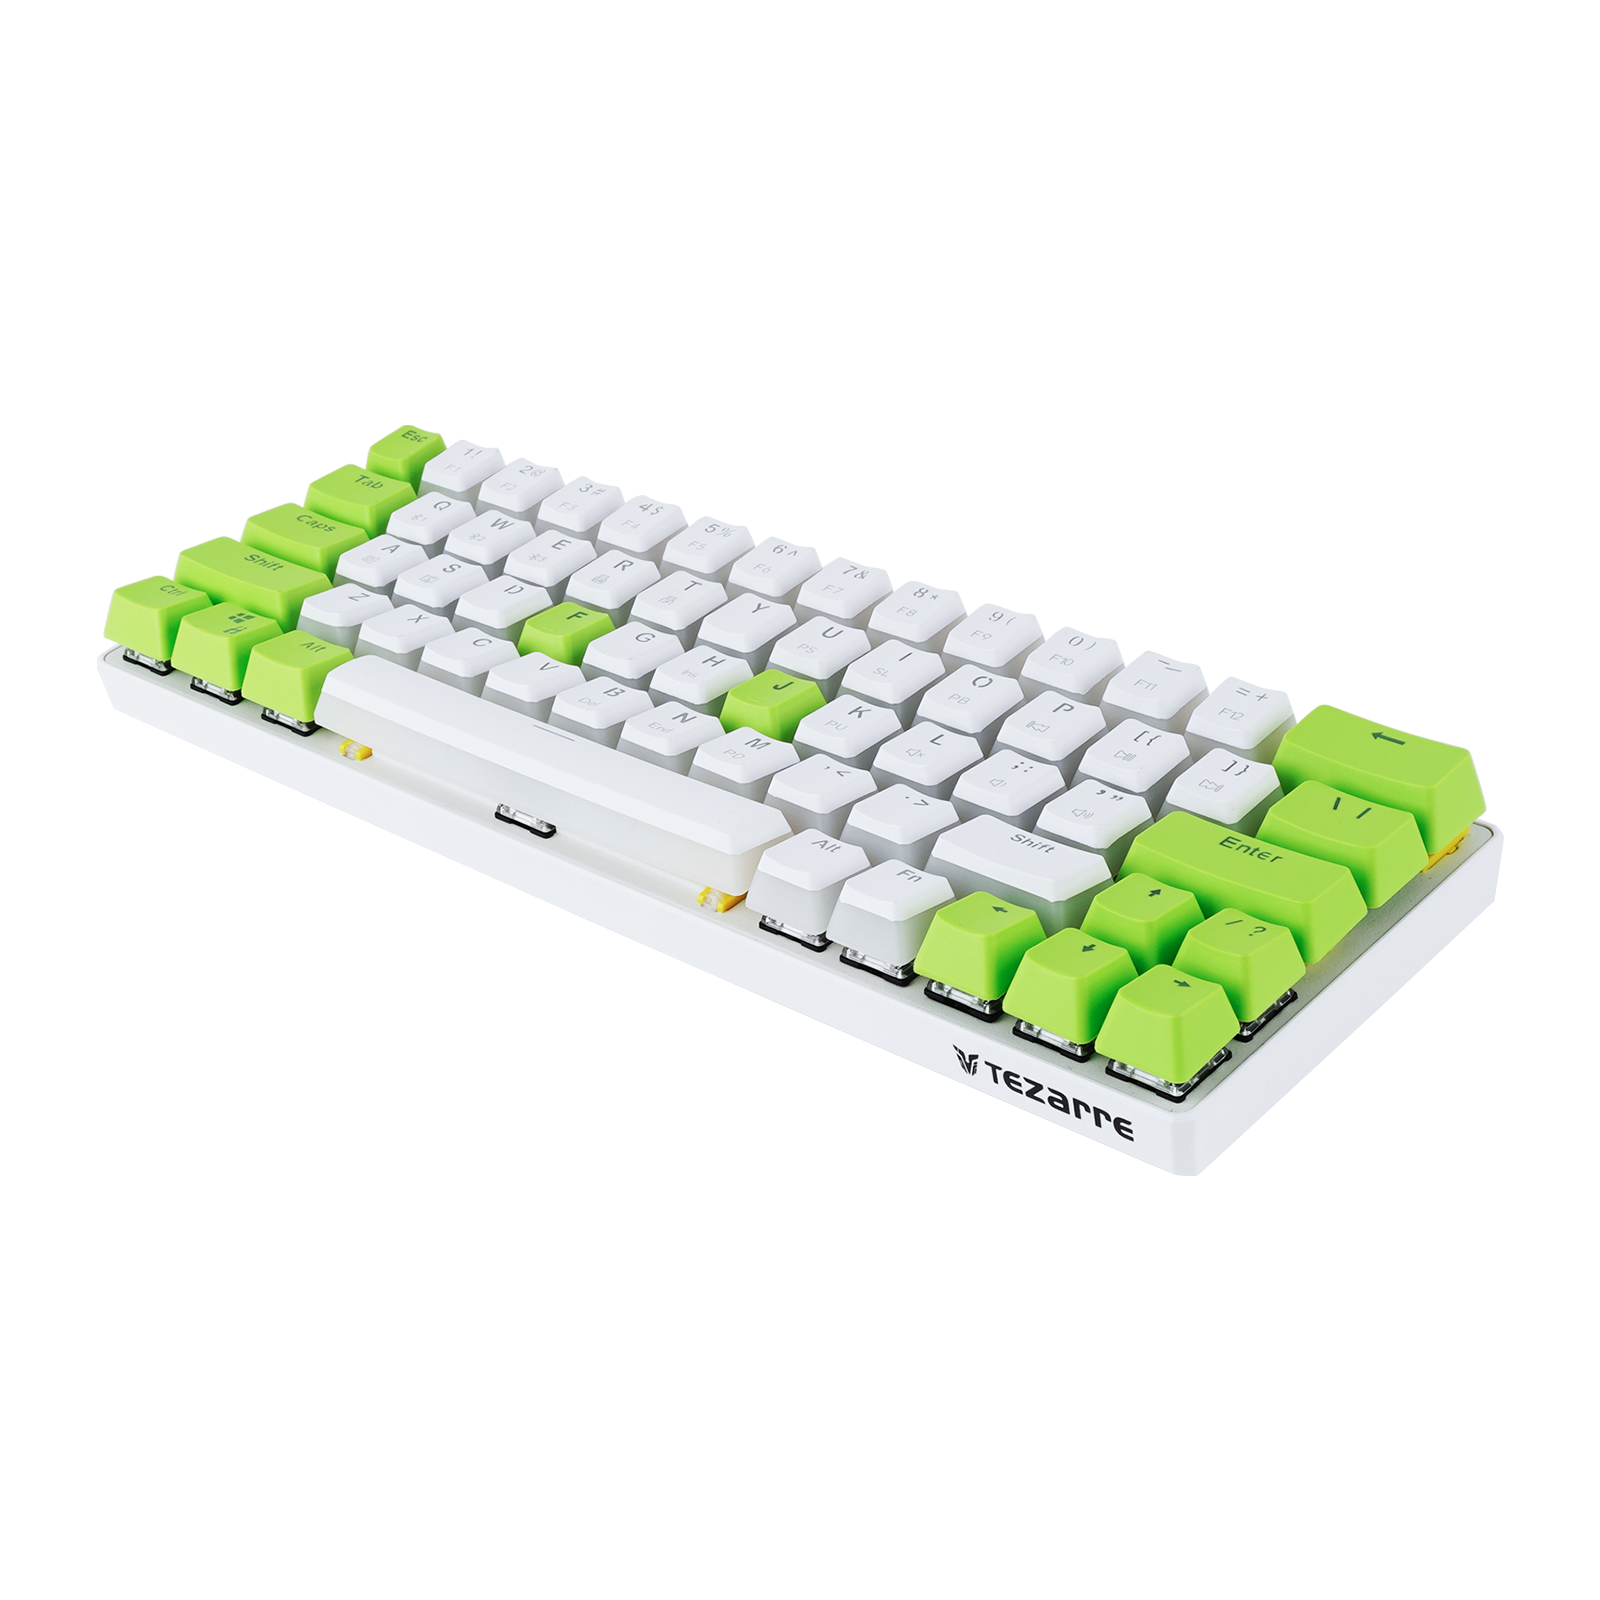 Lucky Clover TK63 - Custom 60% Keyboard